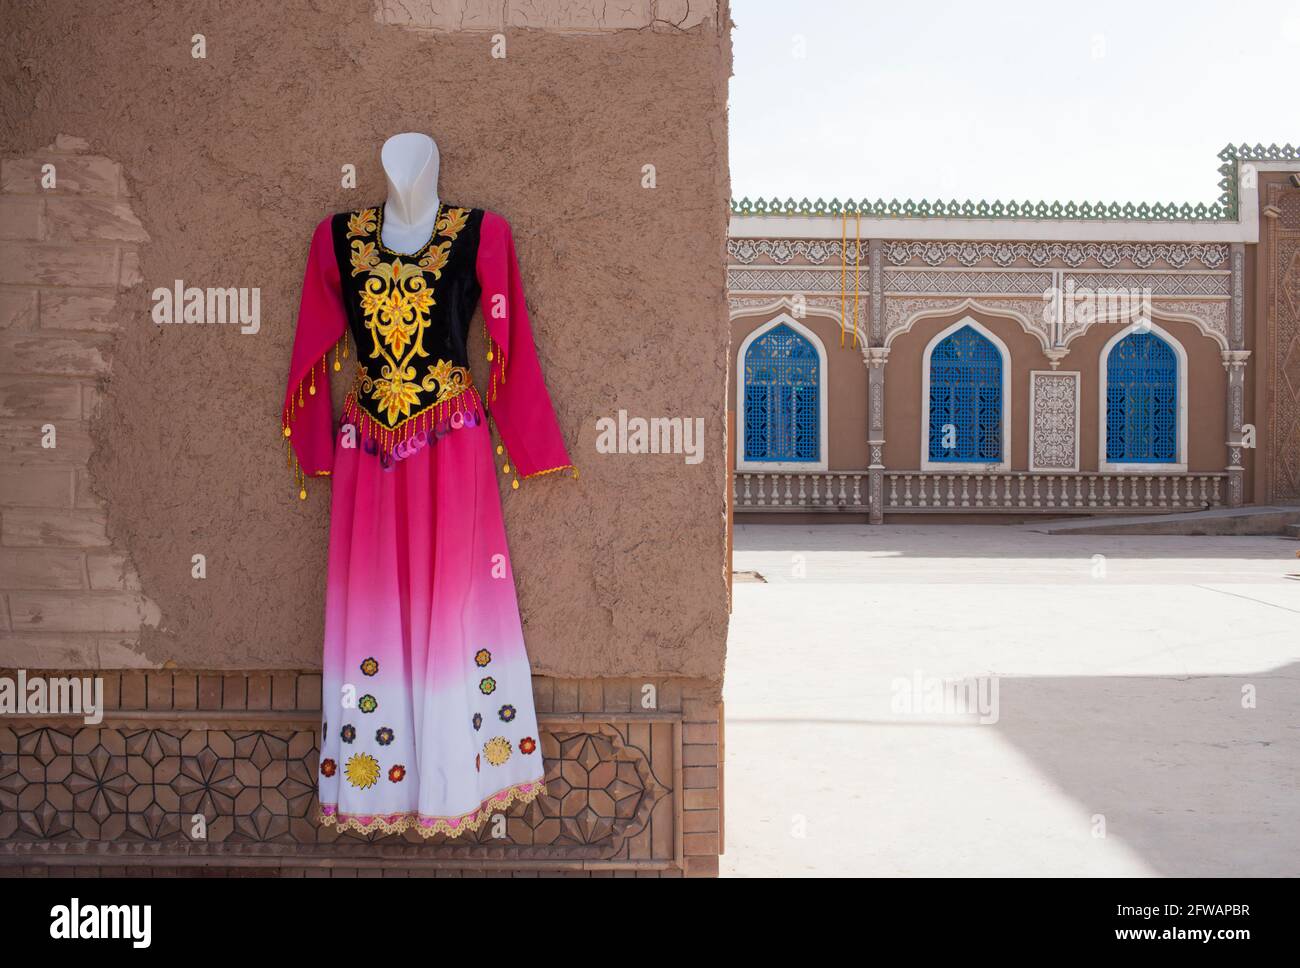 A traditional and festive dress hanging on a wallKashgar, Xinkiang, Popular Republic of China, 2019 Stock Photo